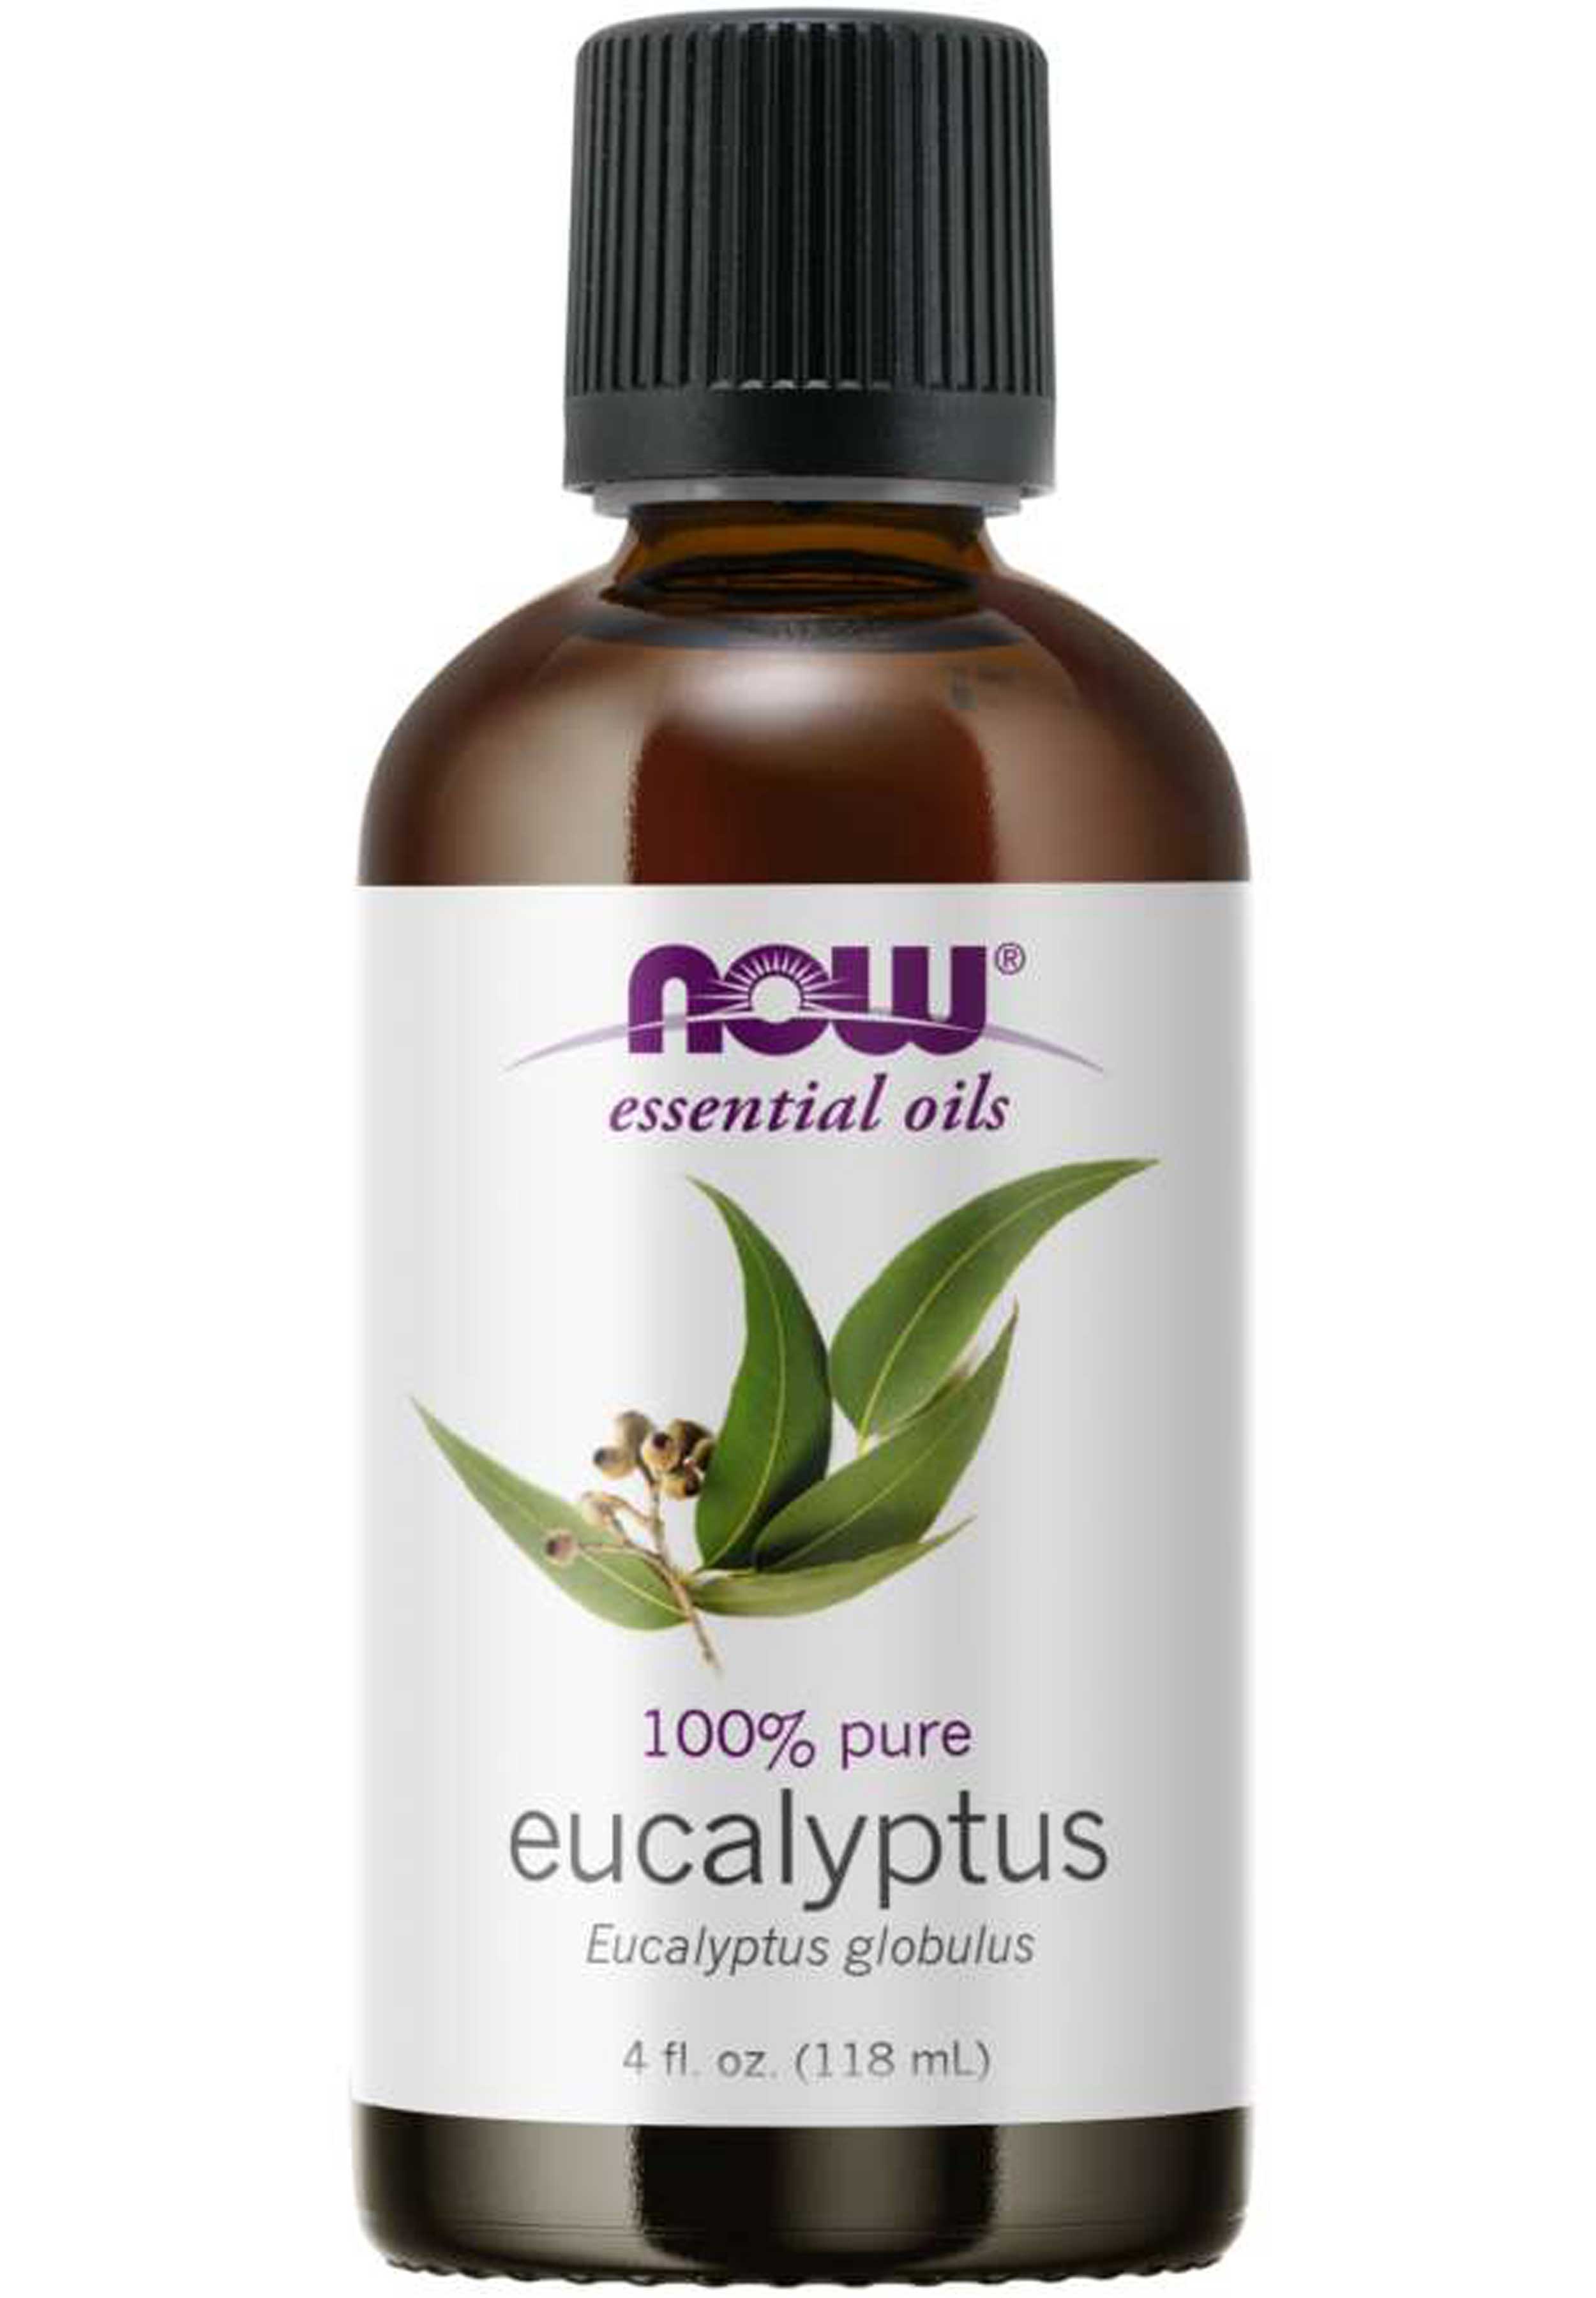 NOW Essential Oils Eucalyptus Oil Globulus